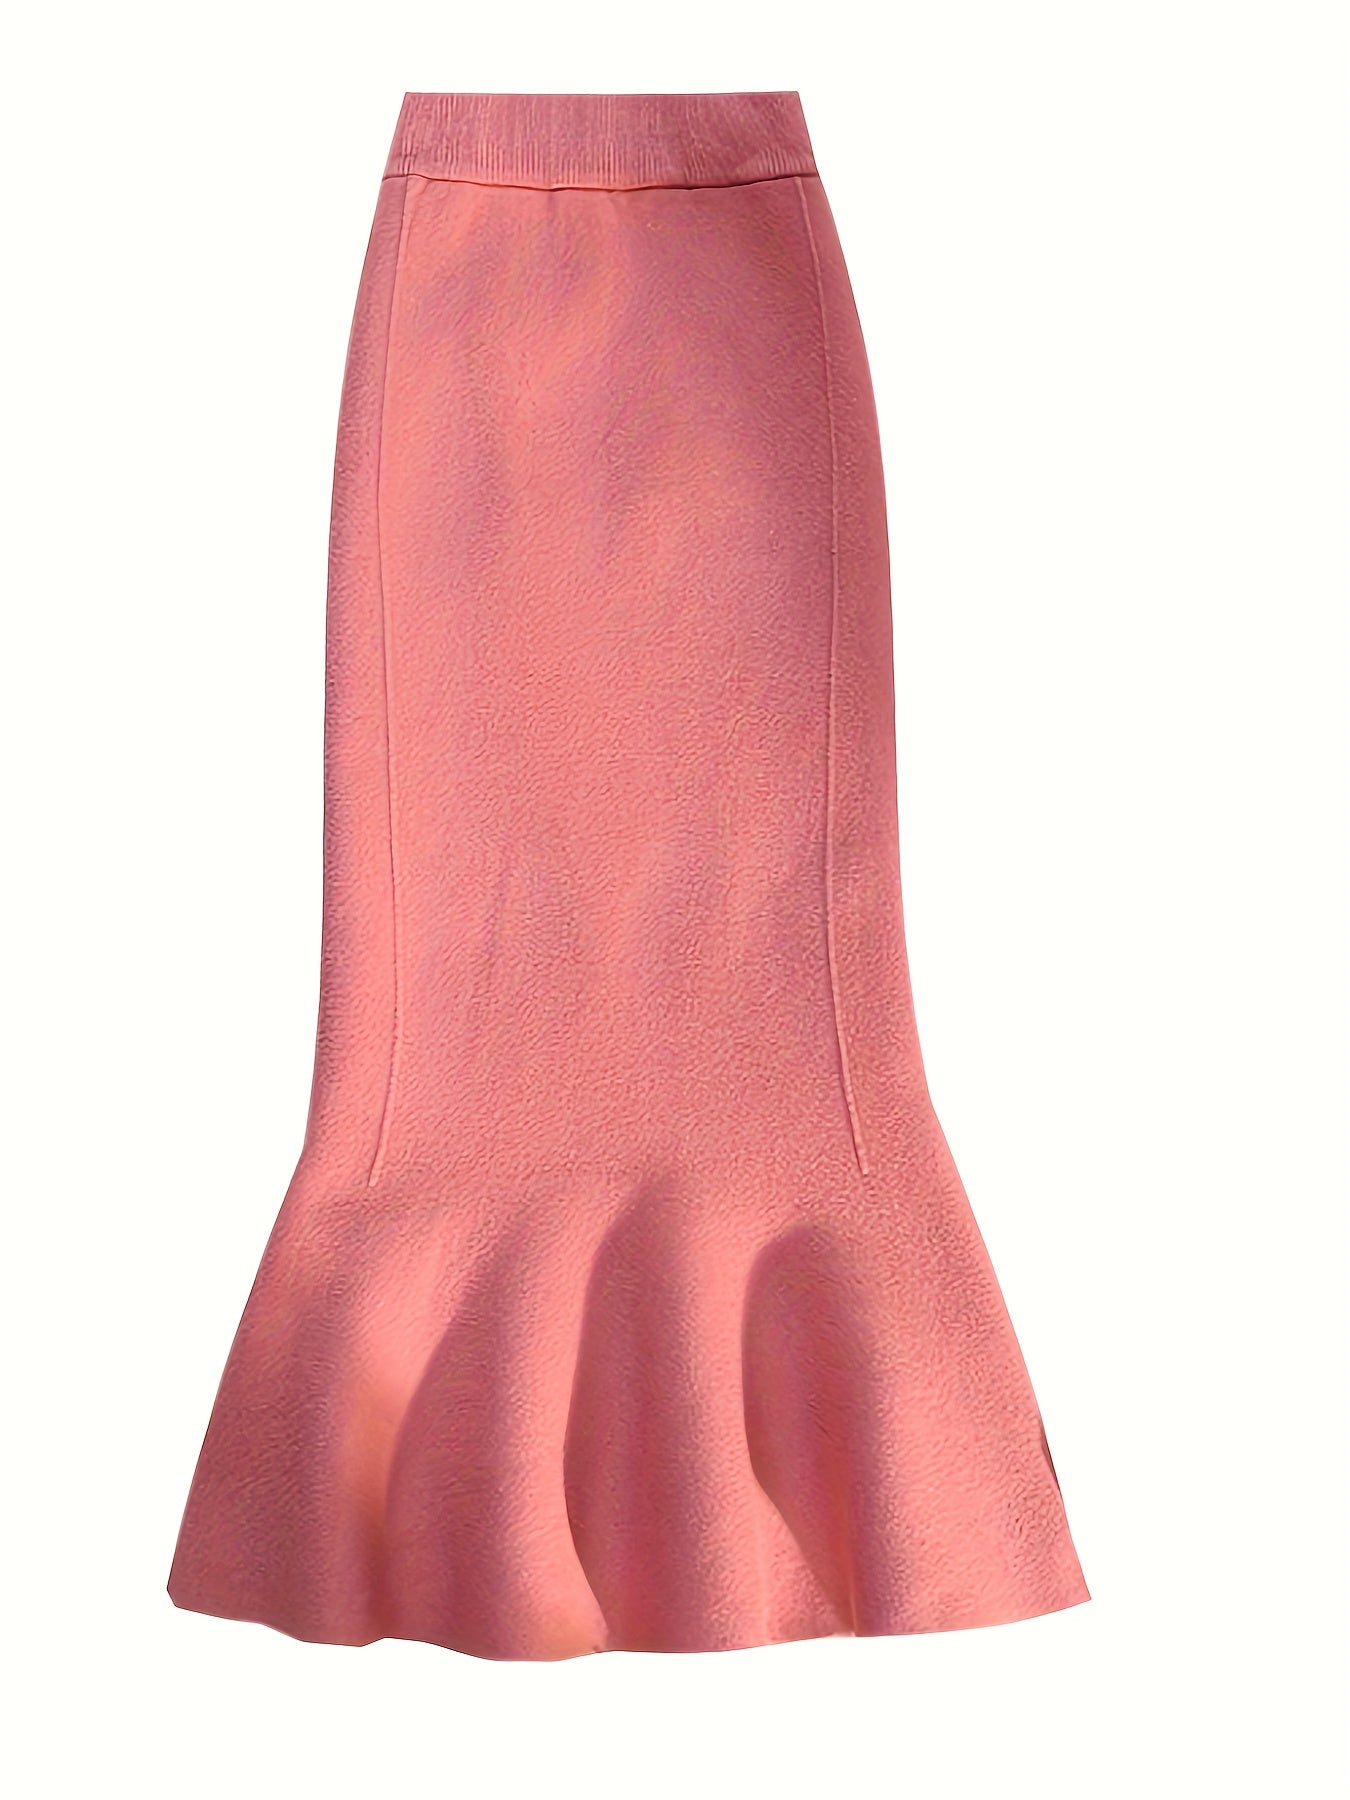 Antmvs Solid High Waist Bodycon Knit Skirt, Elegant Mermaid Hem Midi Skirt For Fall & Winter, Women's Clothing